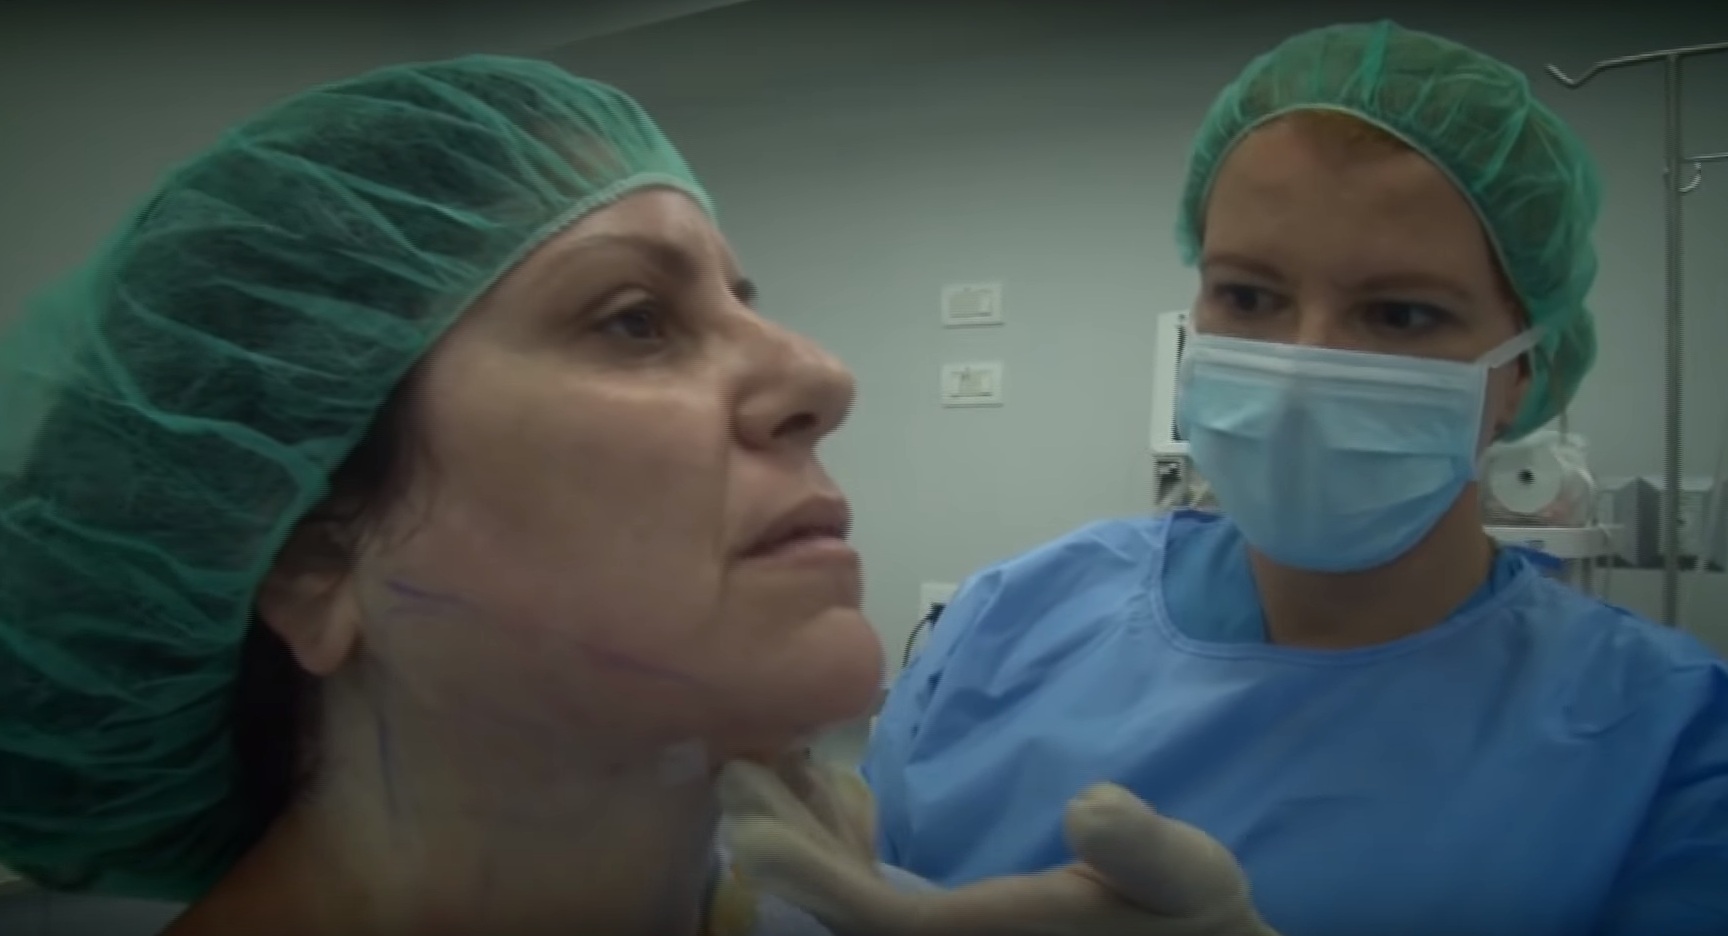 Д-р Анн Гуревич проверяет пациентку после процедуры